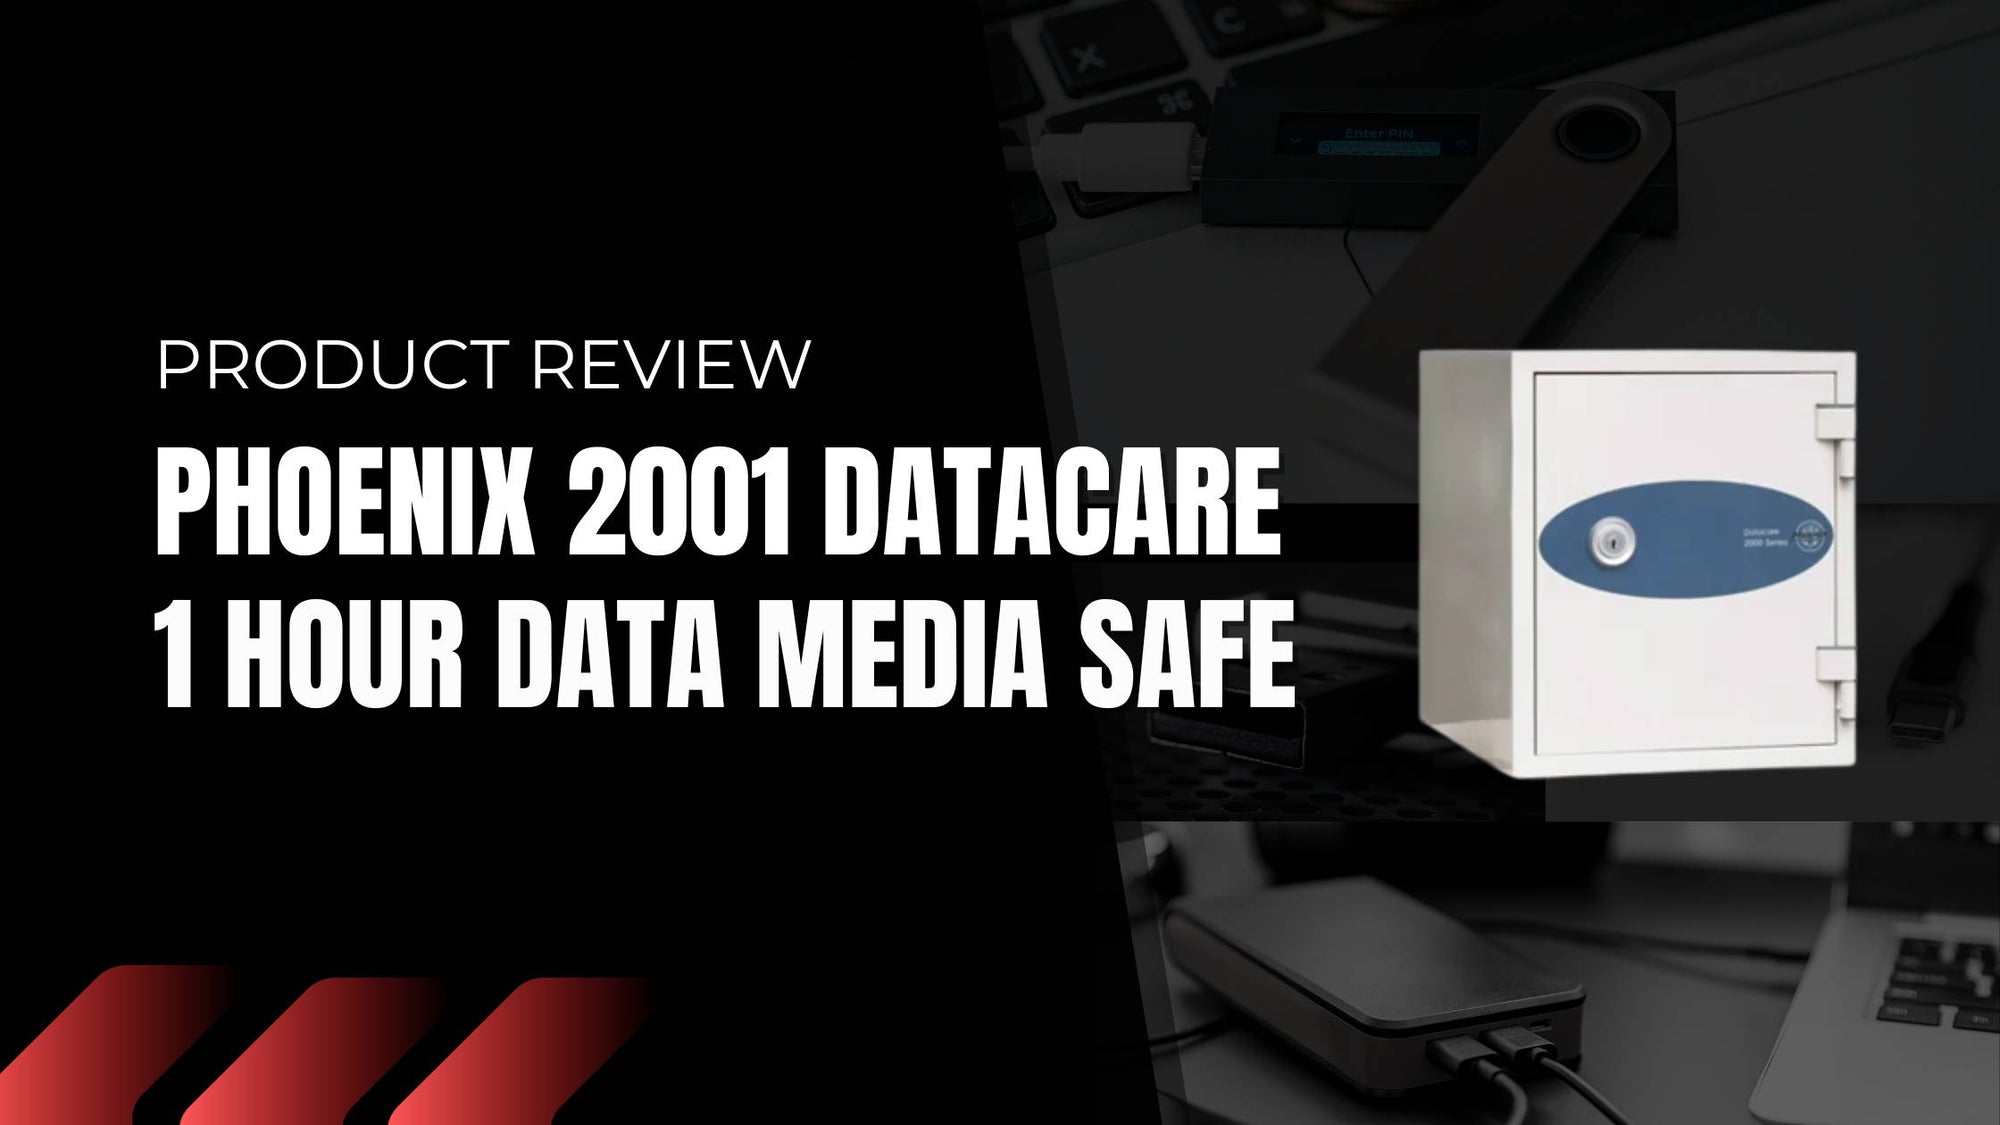 Phoenix 2001 DataCare 1 Hour Data Media Safe Overview